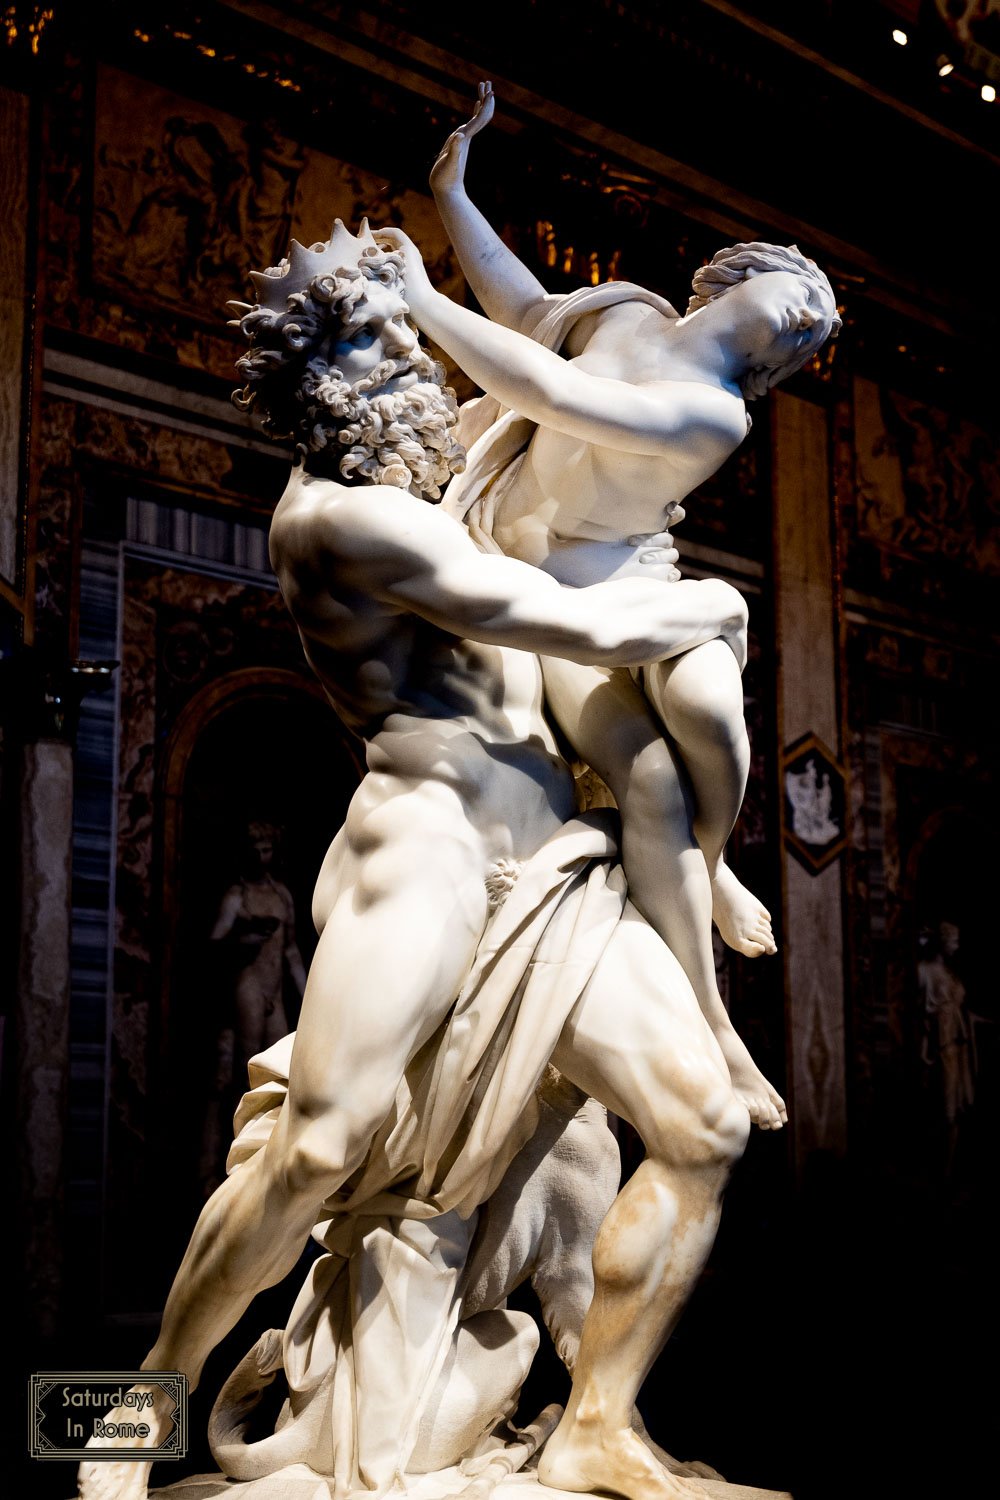 The Rape of Proserpina by Bernini